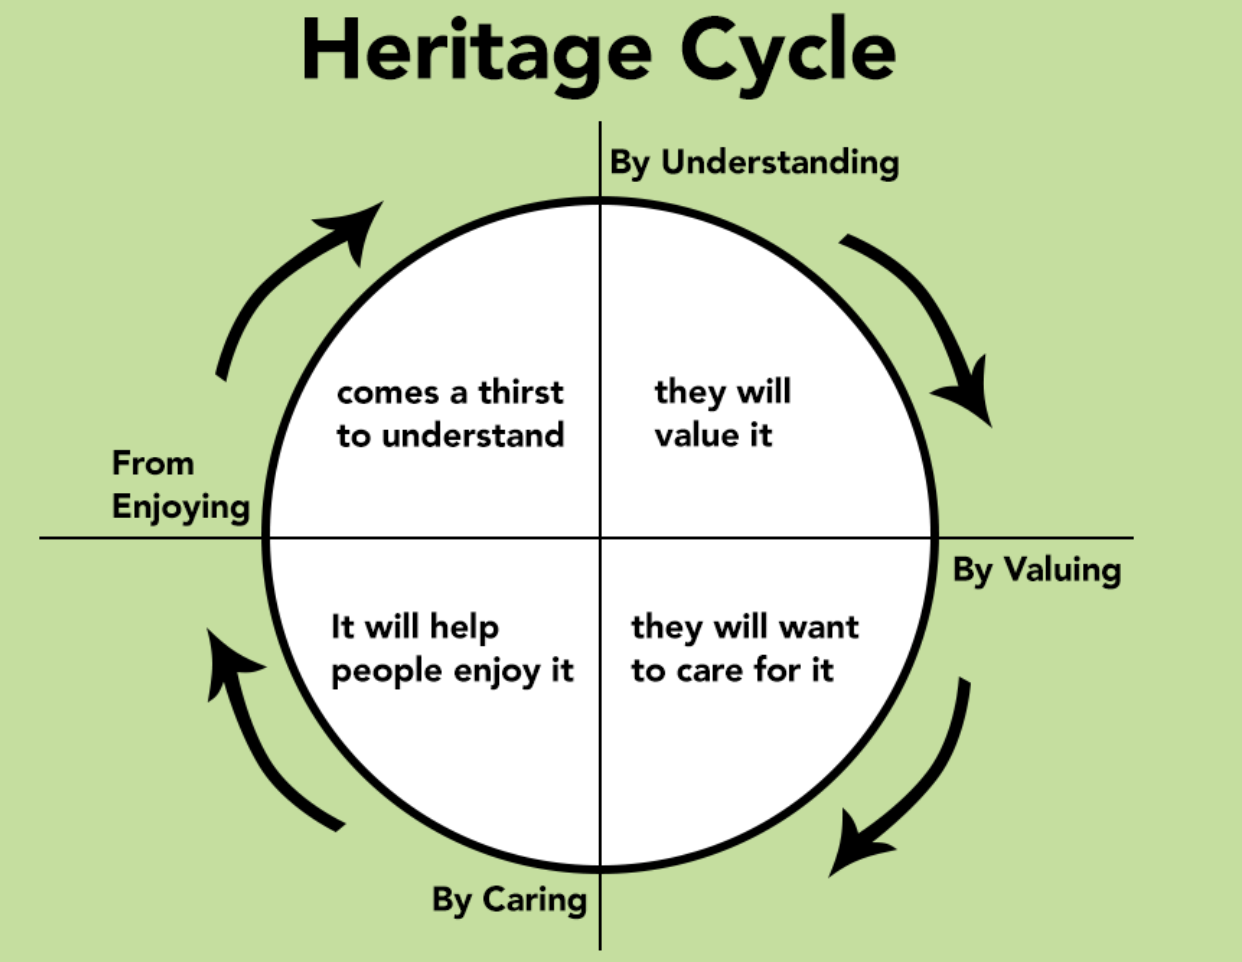 Перевести understand. Cultural Heritage перевод. Understand или understanding. Heritage перевод. Cycle перевод.